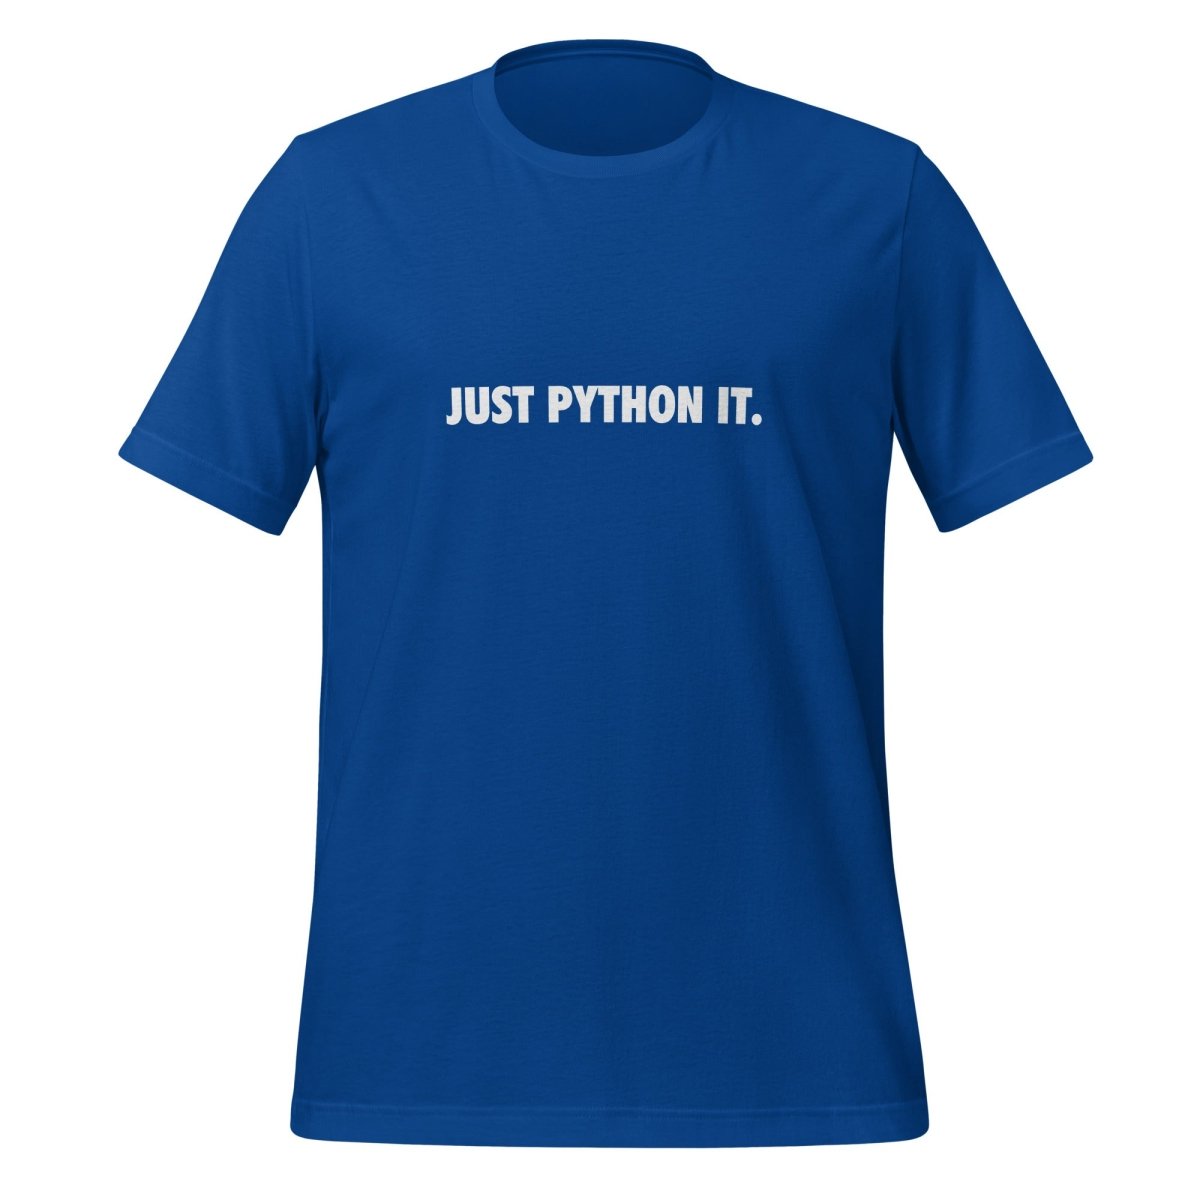 JUST PYTHON IT. T - Shirt (unisex) - True Royal - AI Store